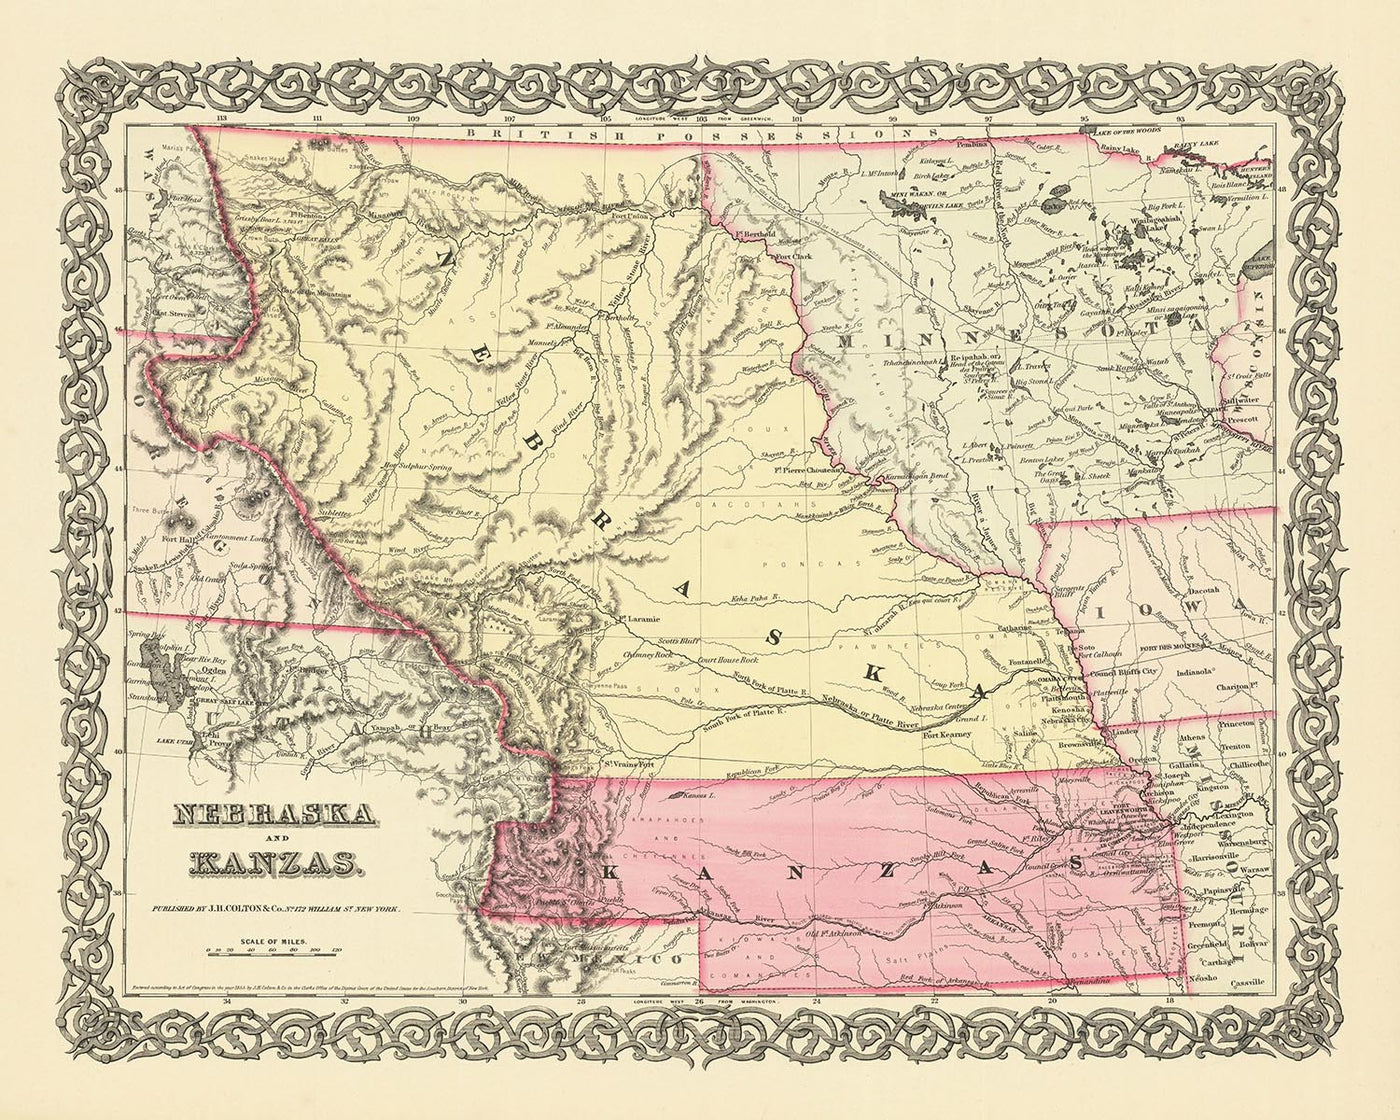 Ancienne carte du Nebraska et du Kansas par Colton, 1856 : Omaha, Bellevue, Nebraska City, Leavenworth, Lawrence